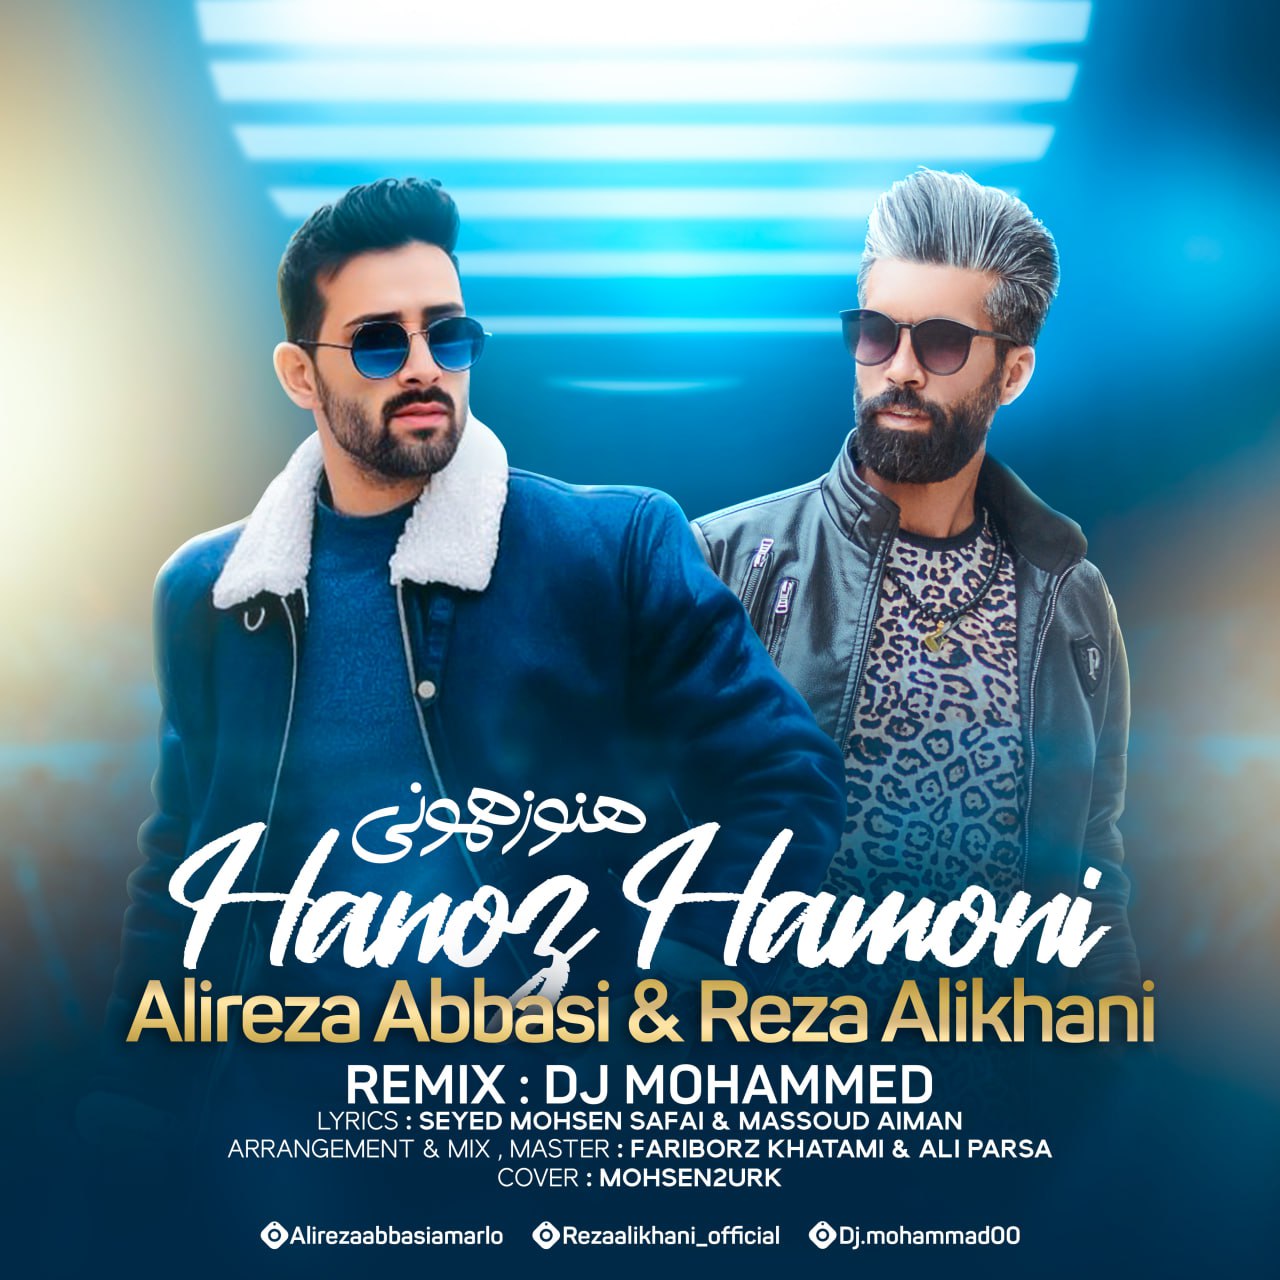 Alireza Abbasi & Reza Alikhani – Hanoz Hamoni (Remix)